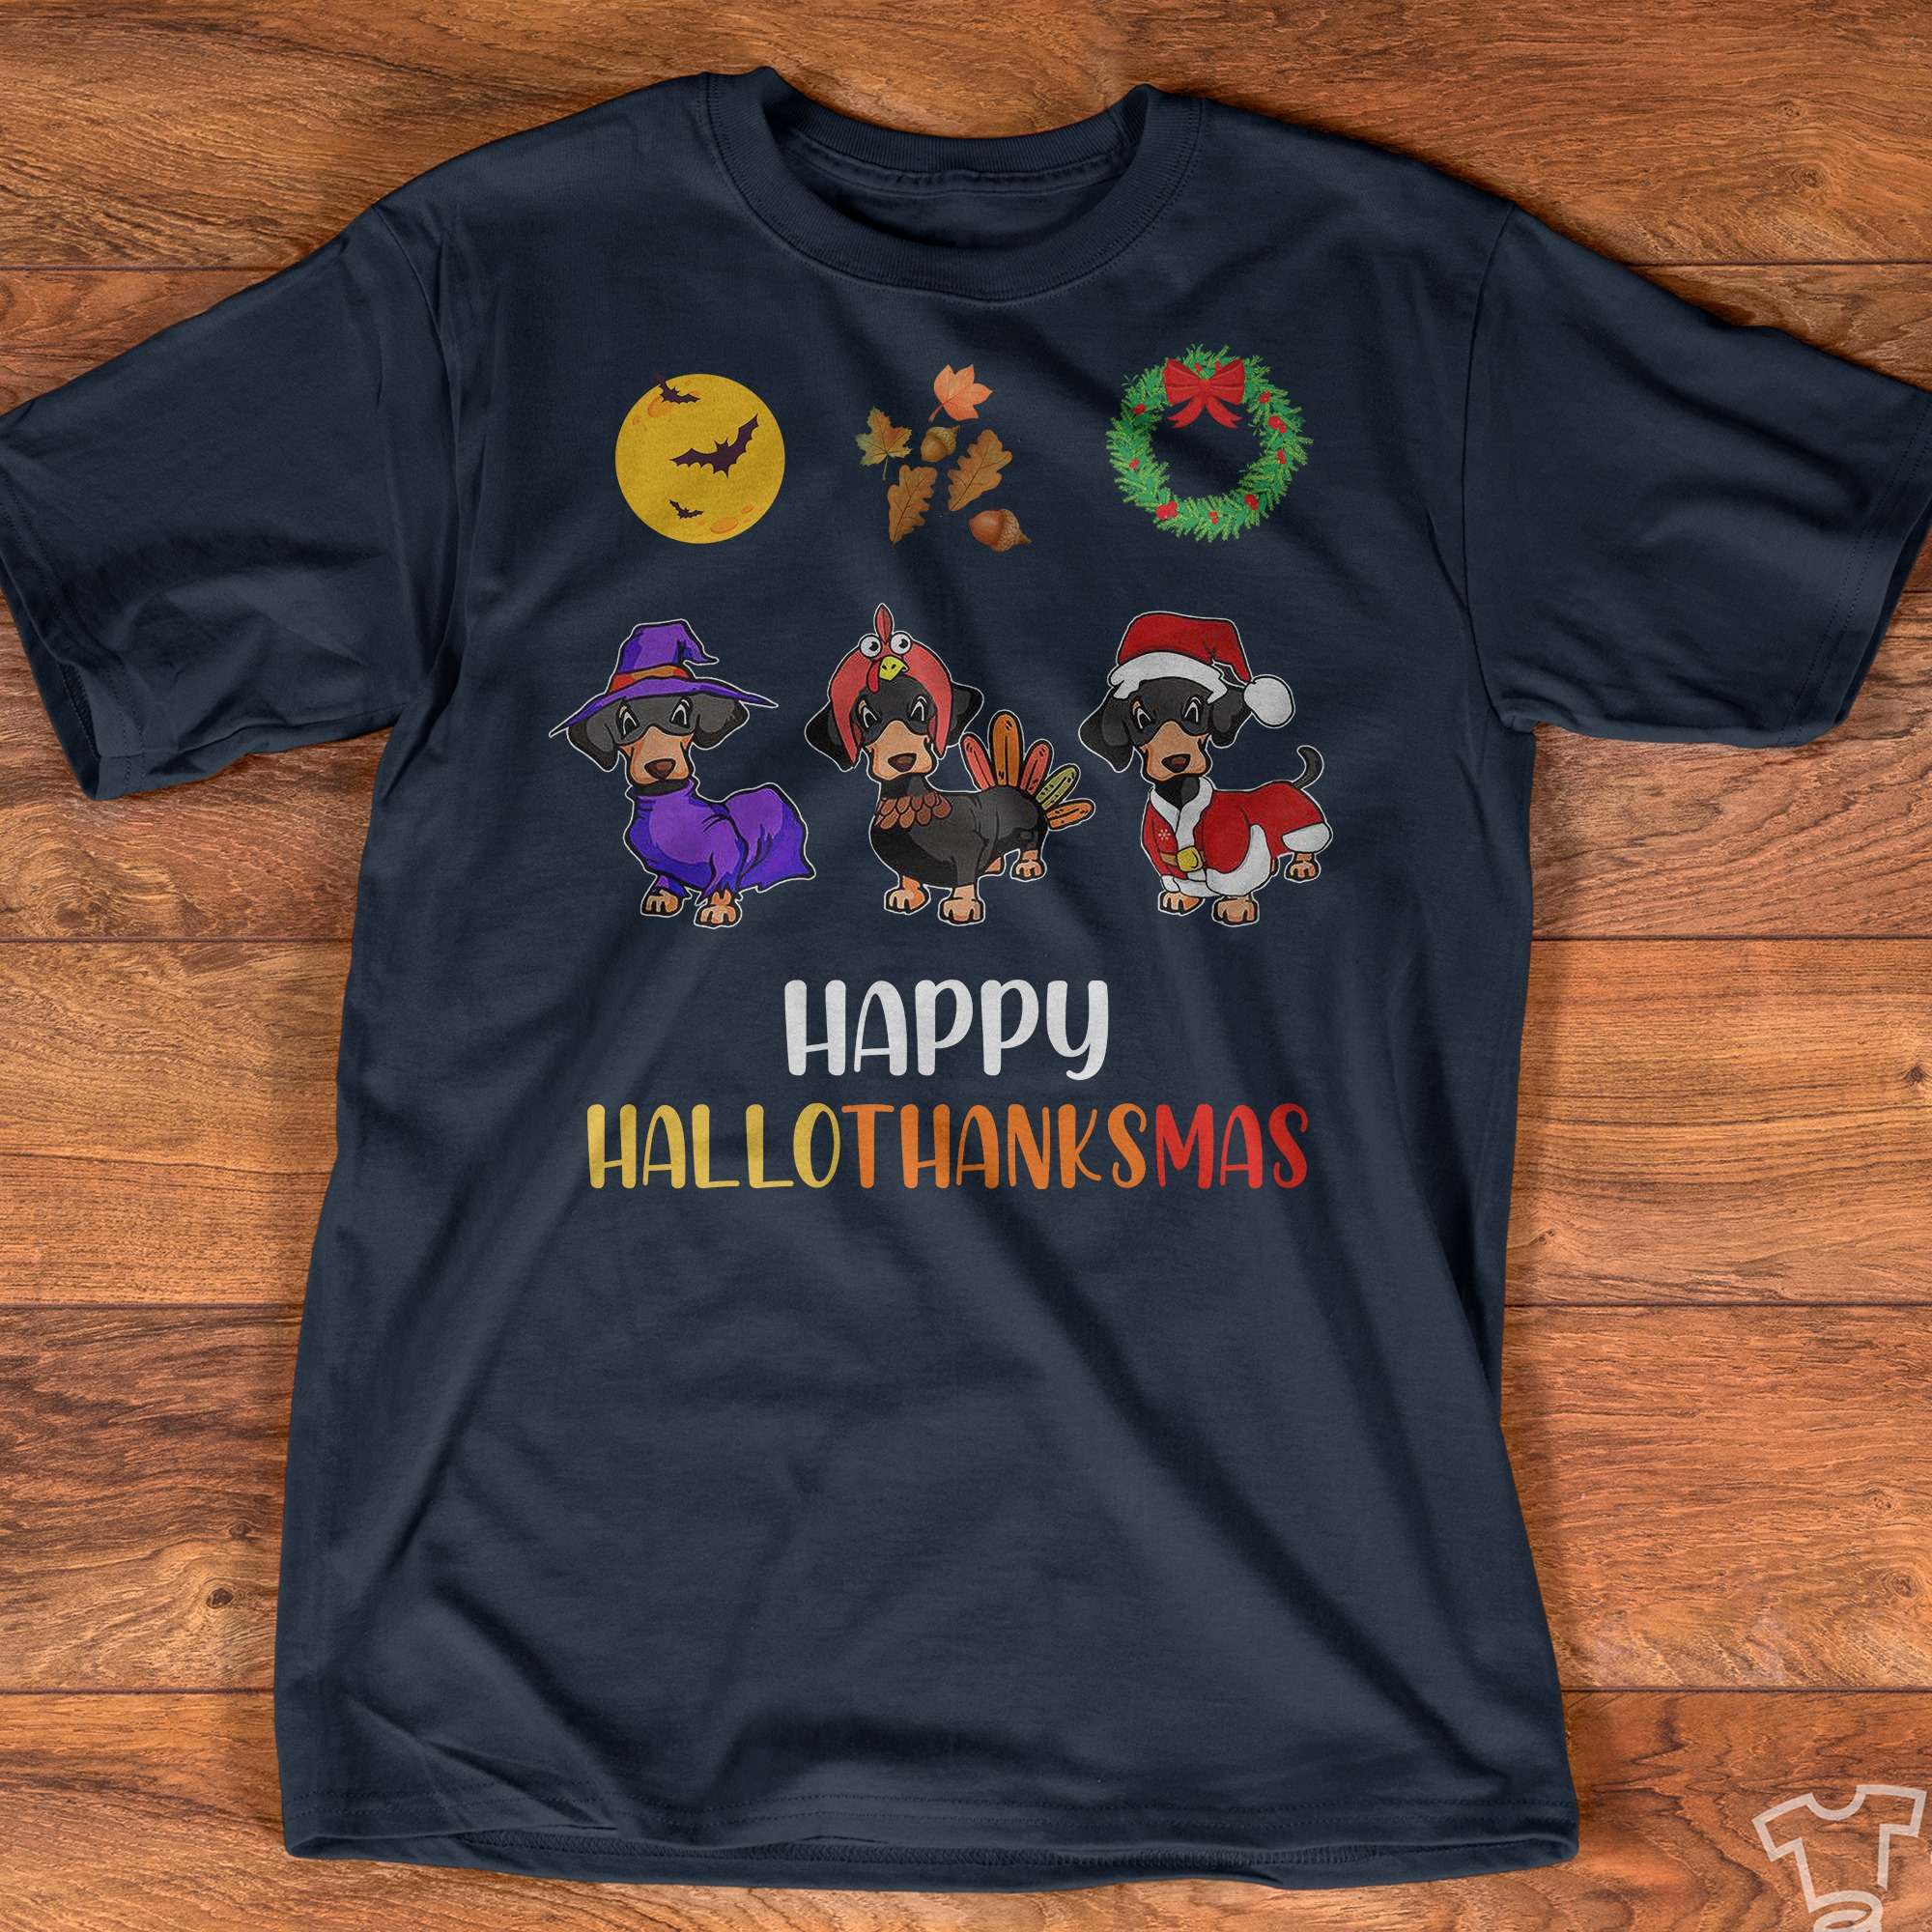 Happy HalloThanksMas - Dachshund costume gift, gift for dog lover